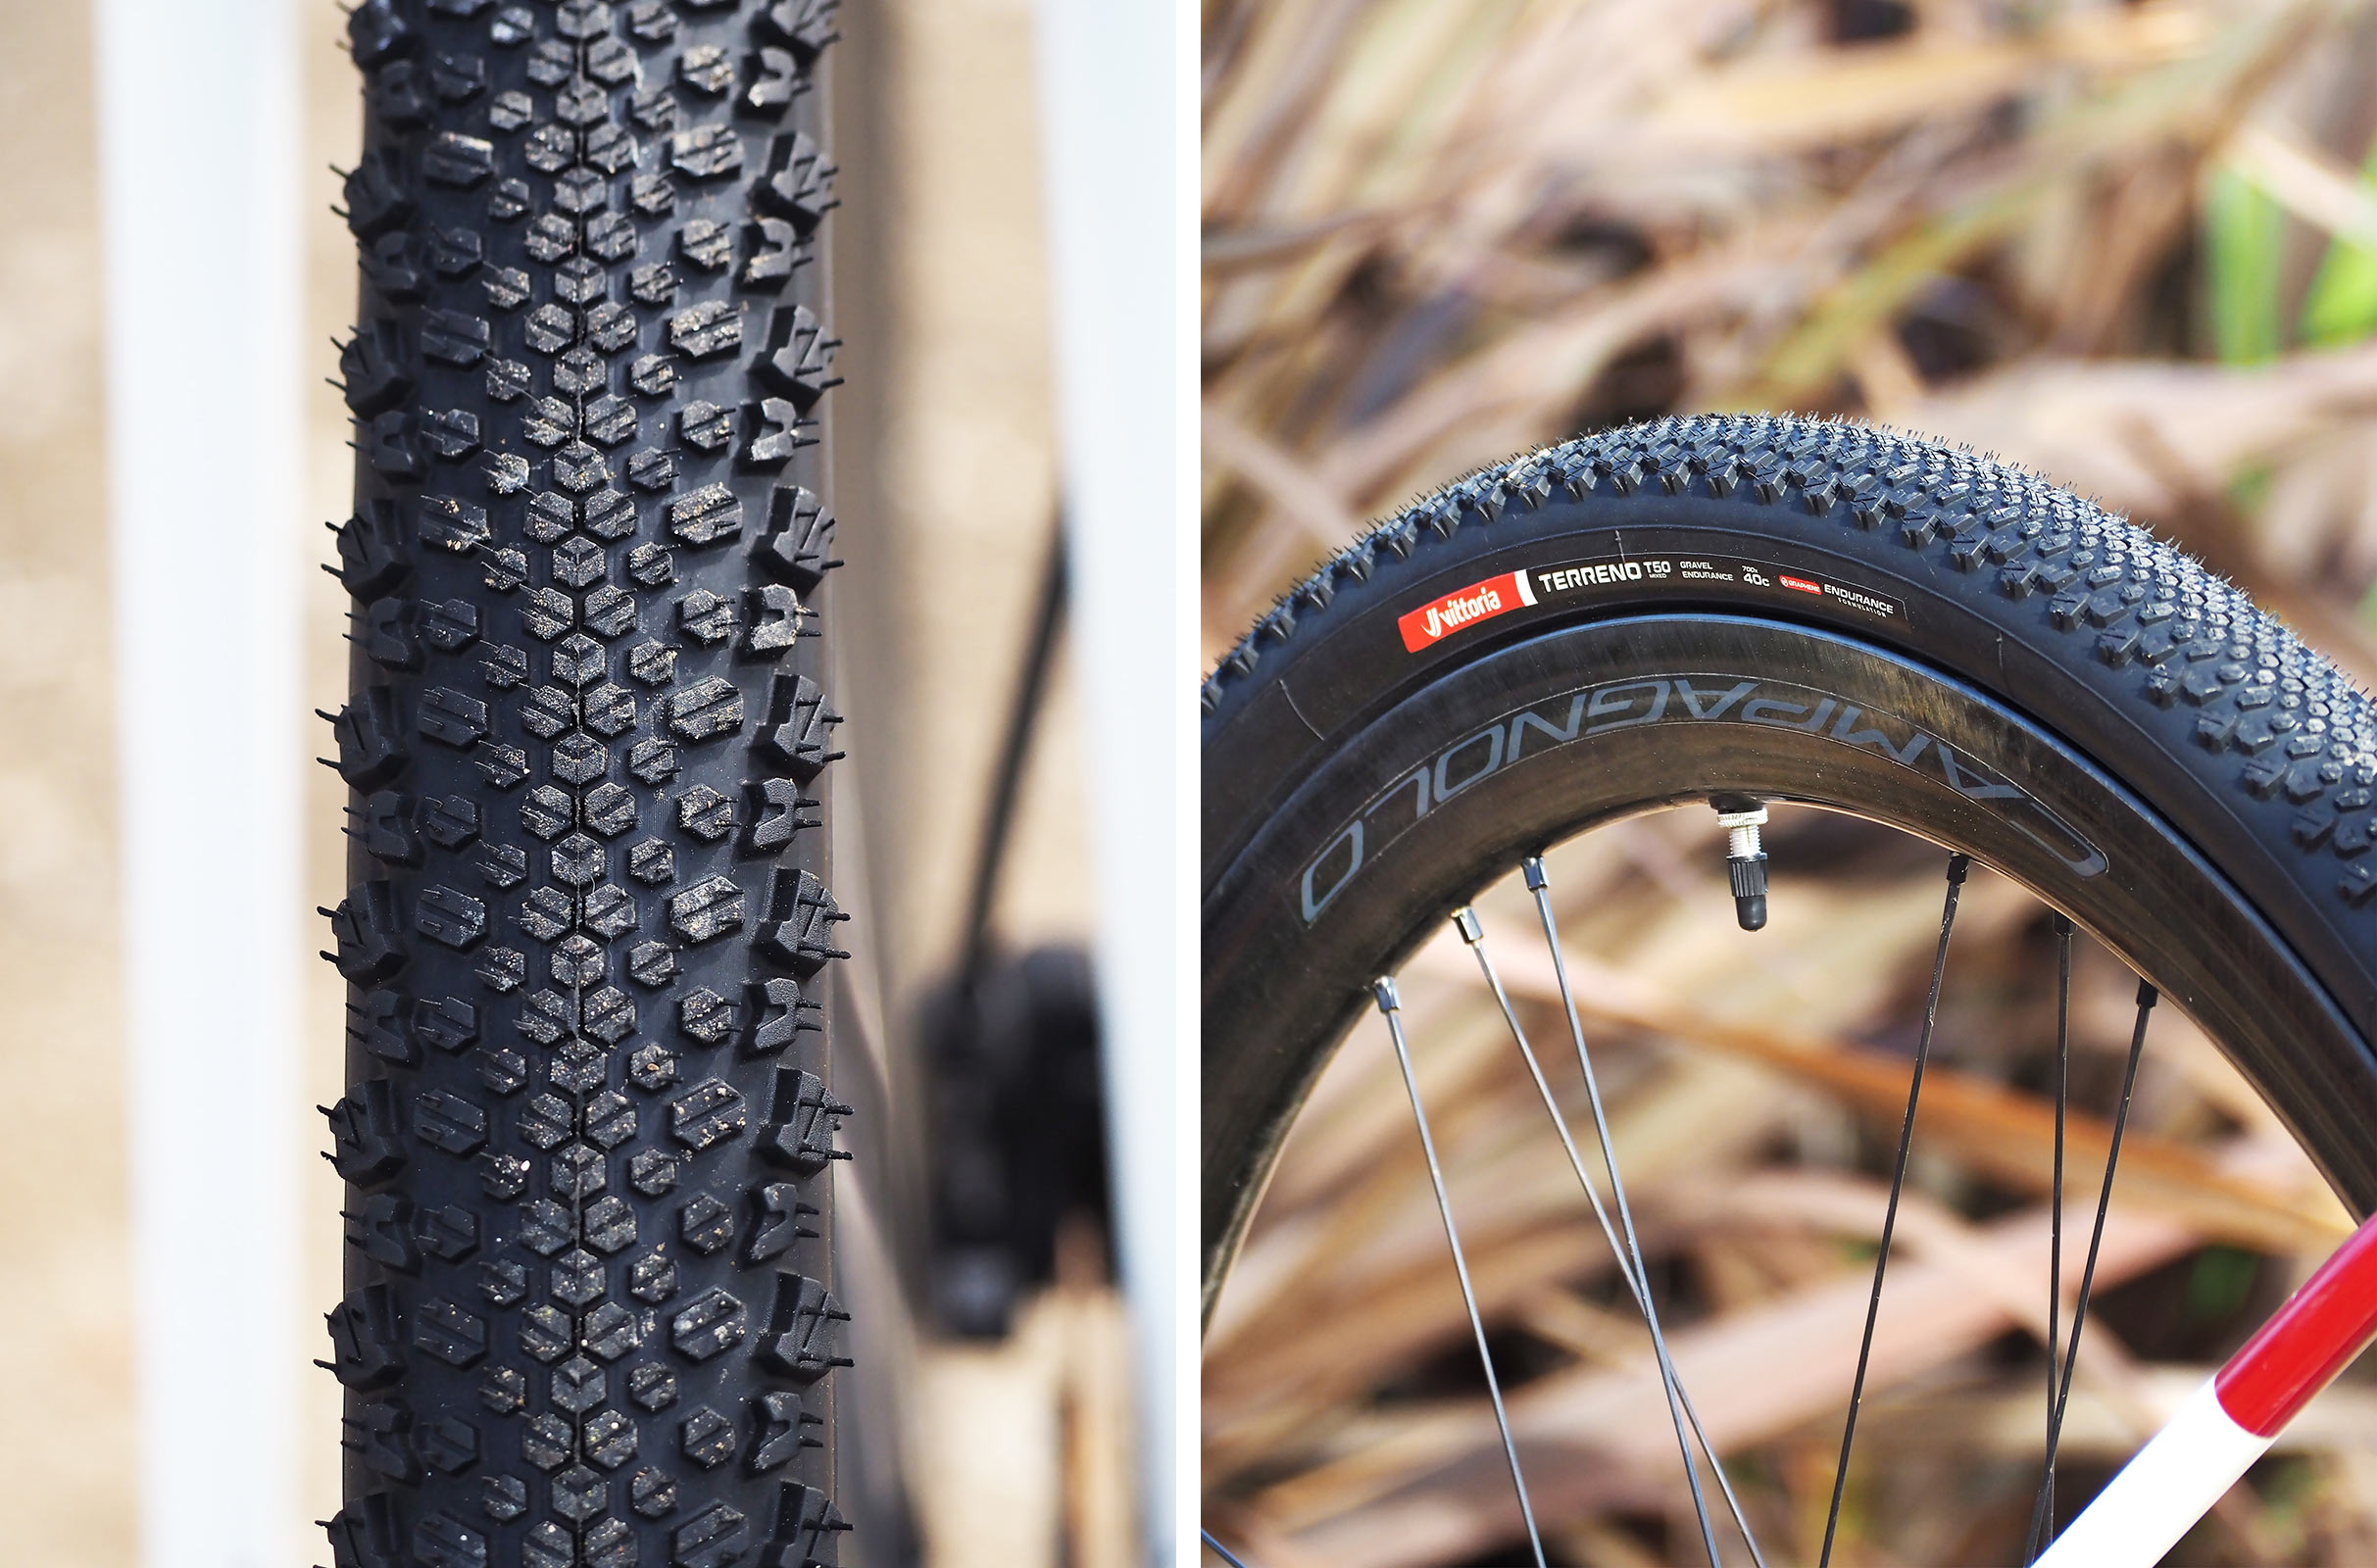 vittoria terreno mixed T50 gravel bike tires shown from various angles.